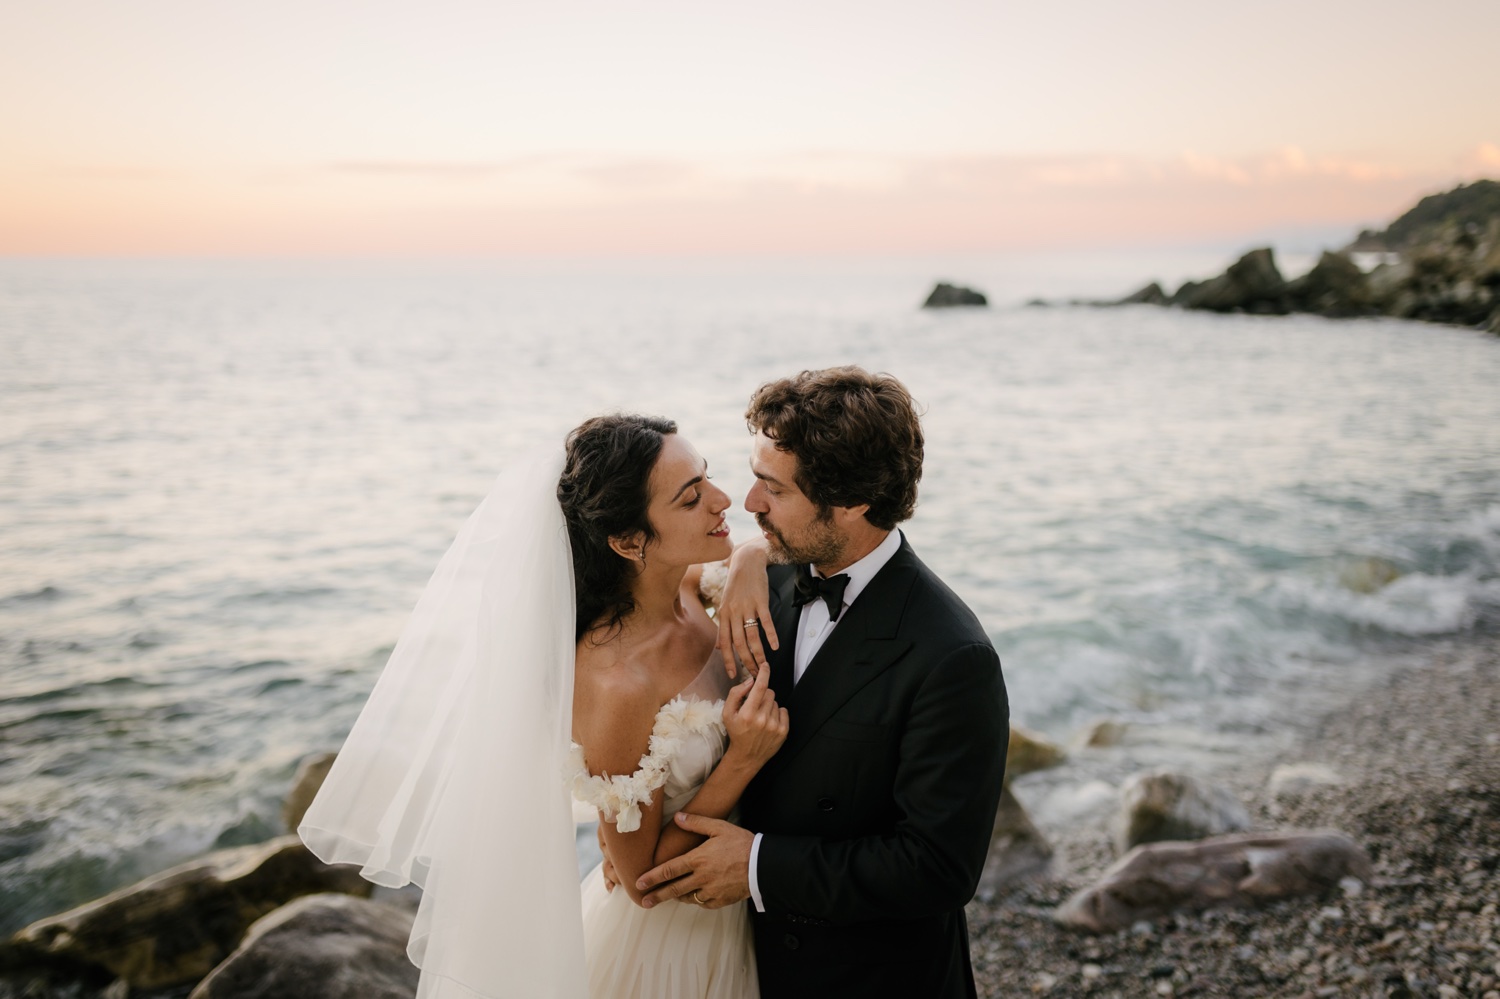 Elisa & Joseph | Corsica Destination Wedding Photography